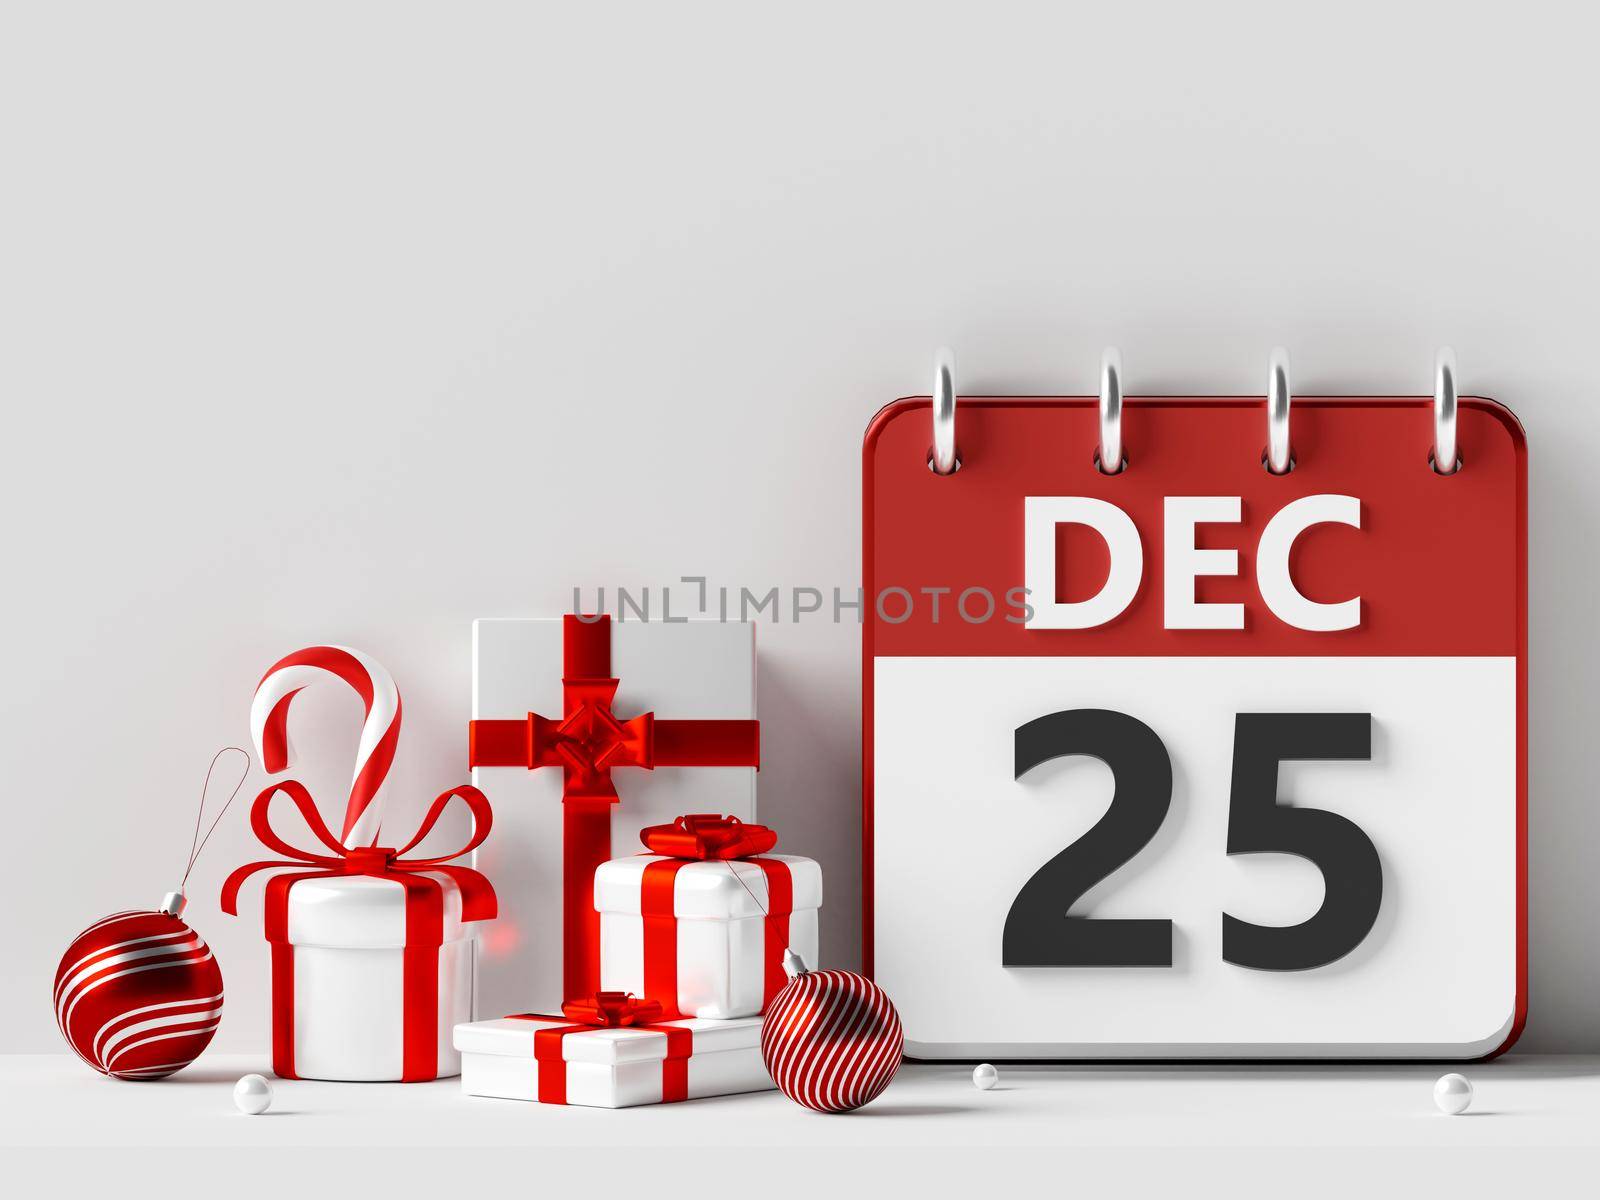 3d illustration of 25 DEC Christmas day on calendarwith gift box by nutzchotwarut